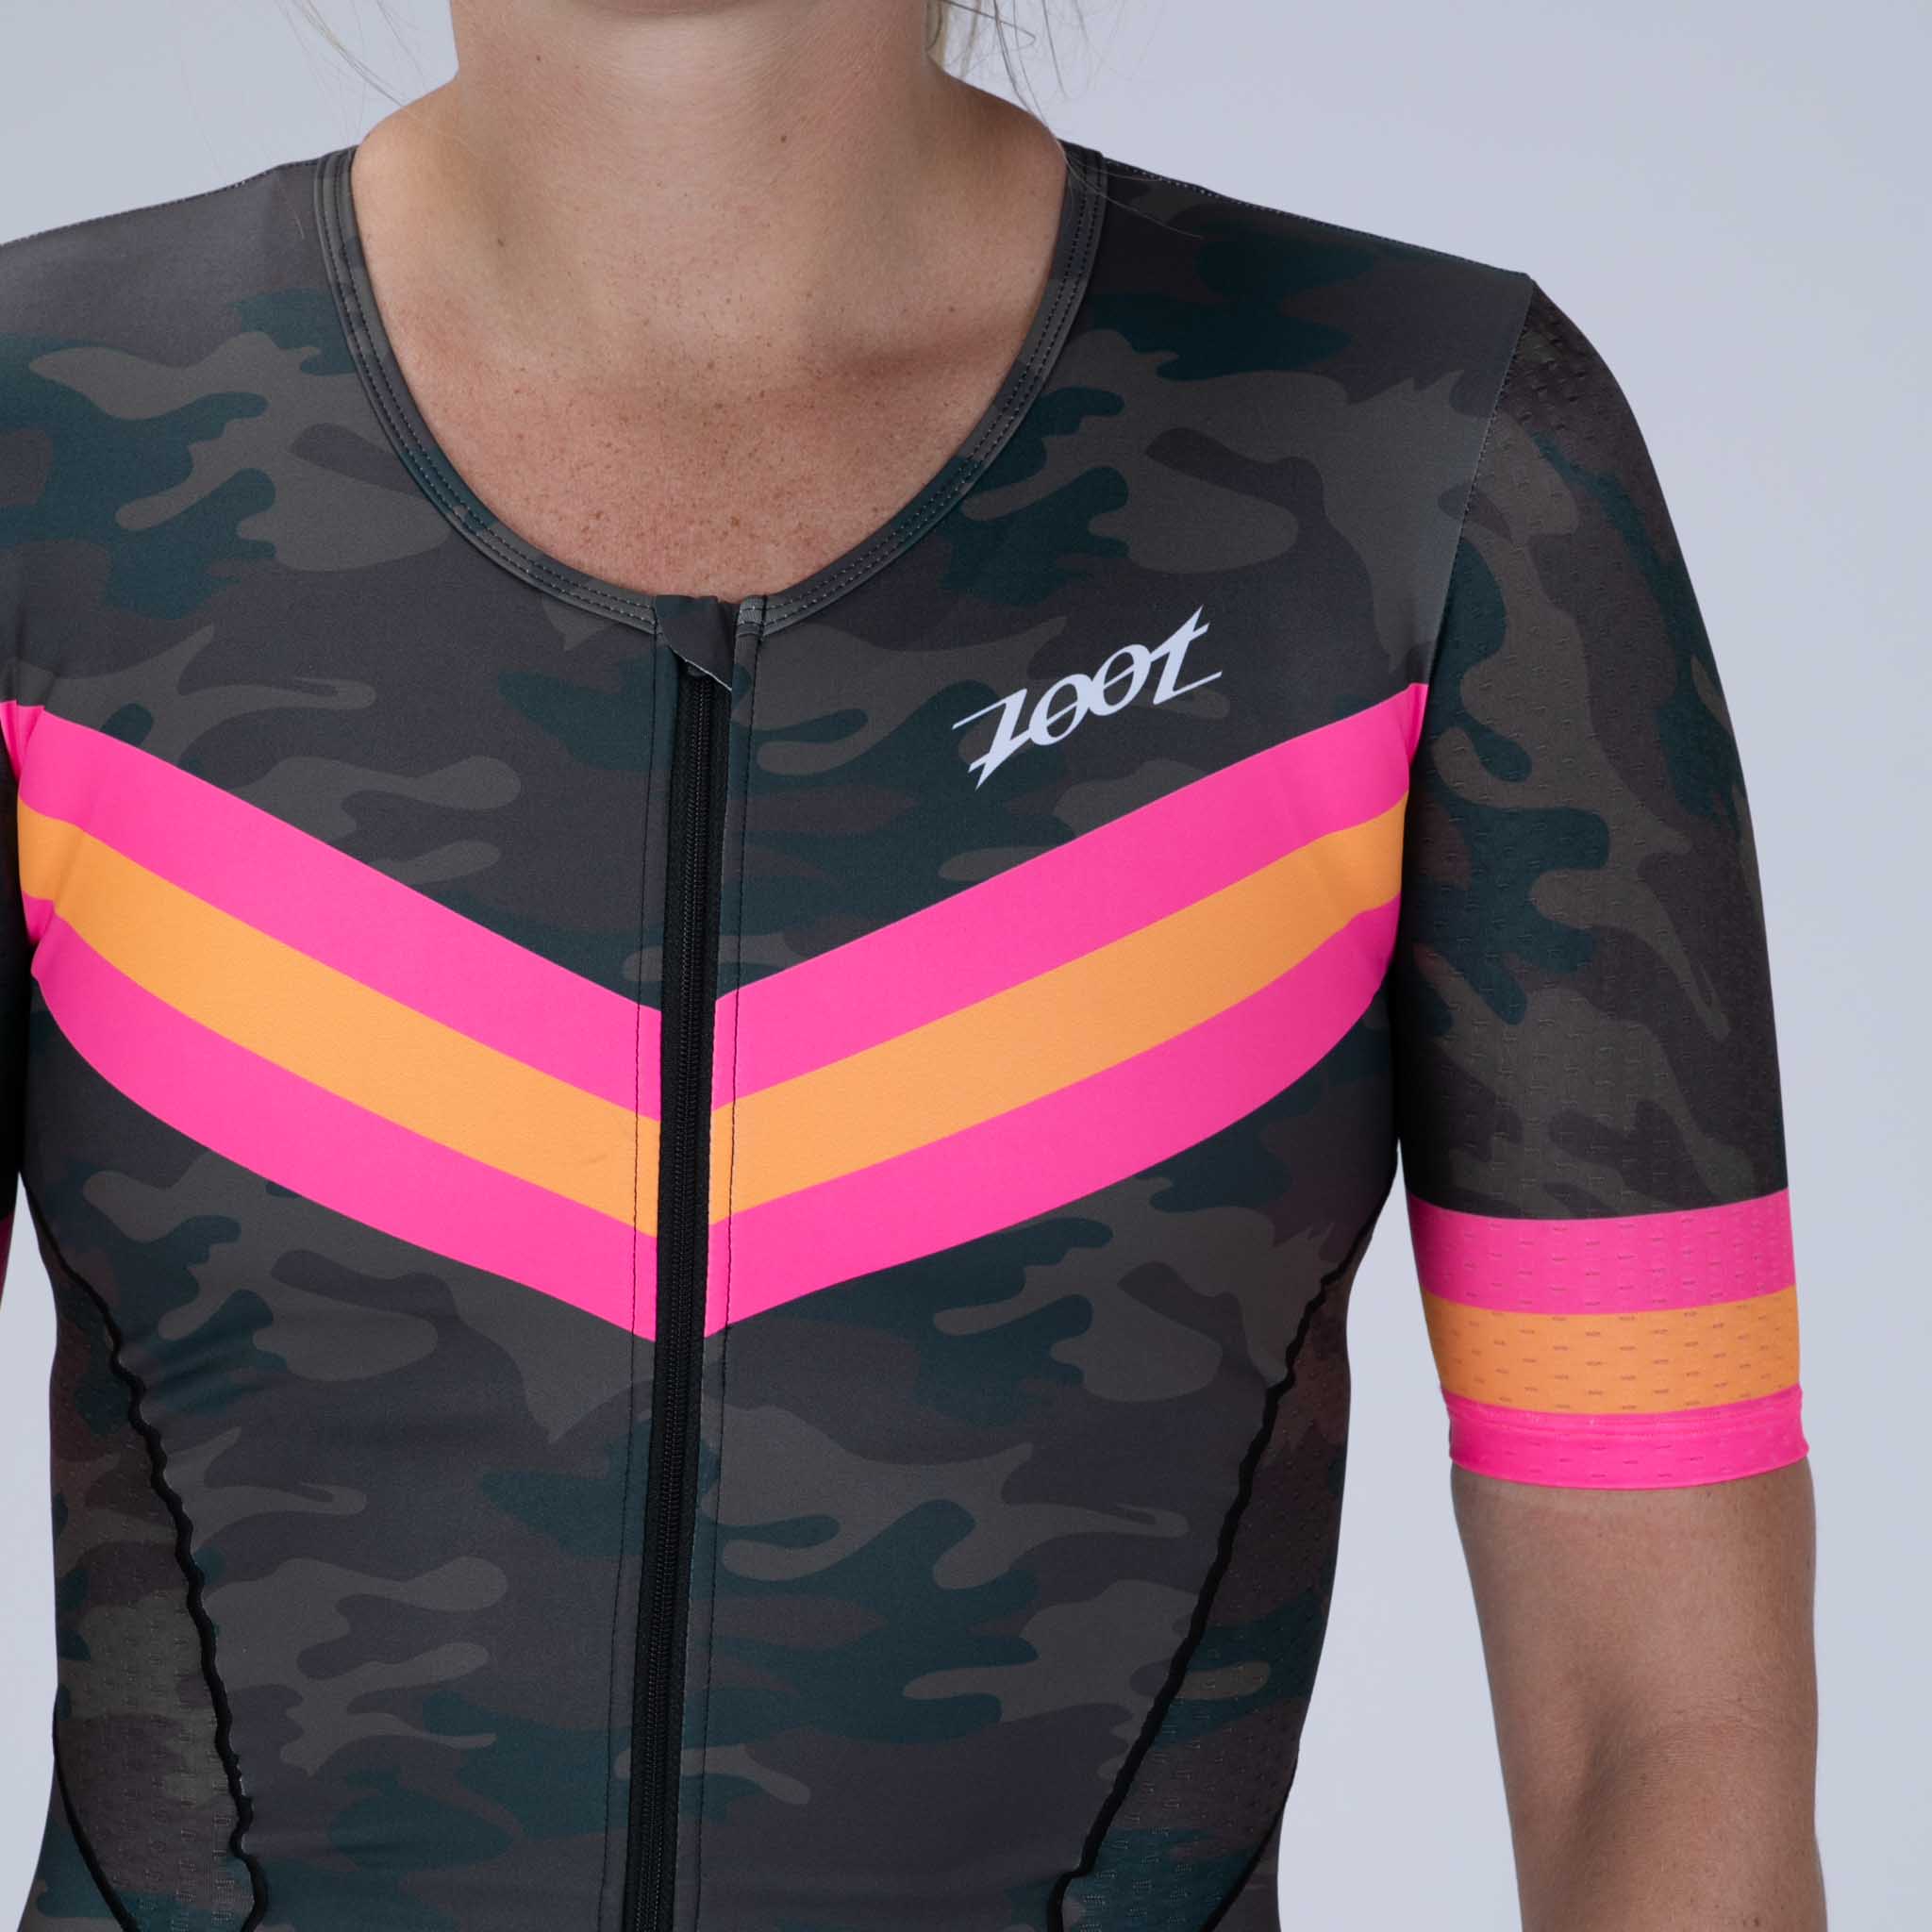 Zoot Sports TRI RACESUITS Women's Ltd Tri Aero Fz Racesuit - Cali Camo